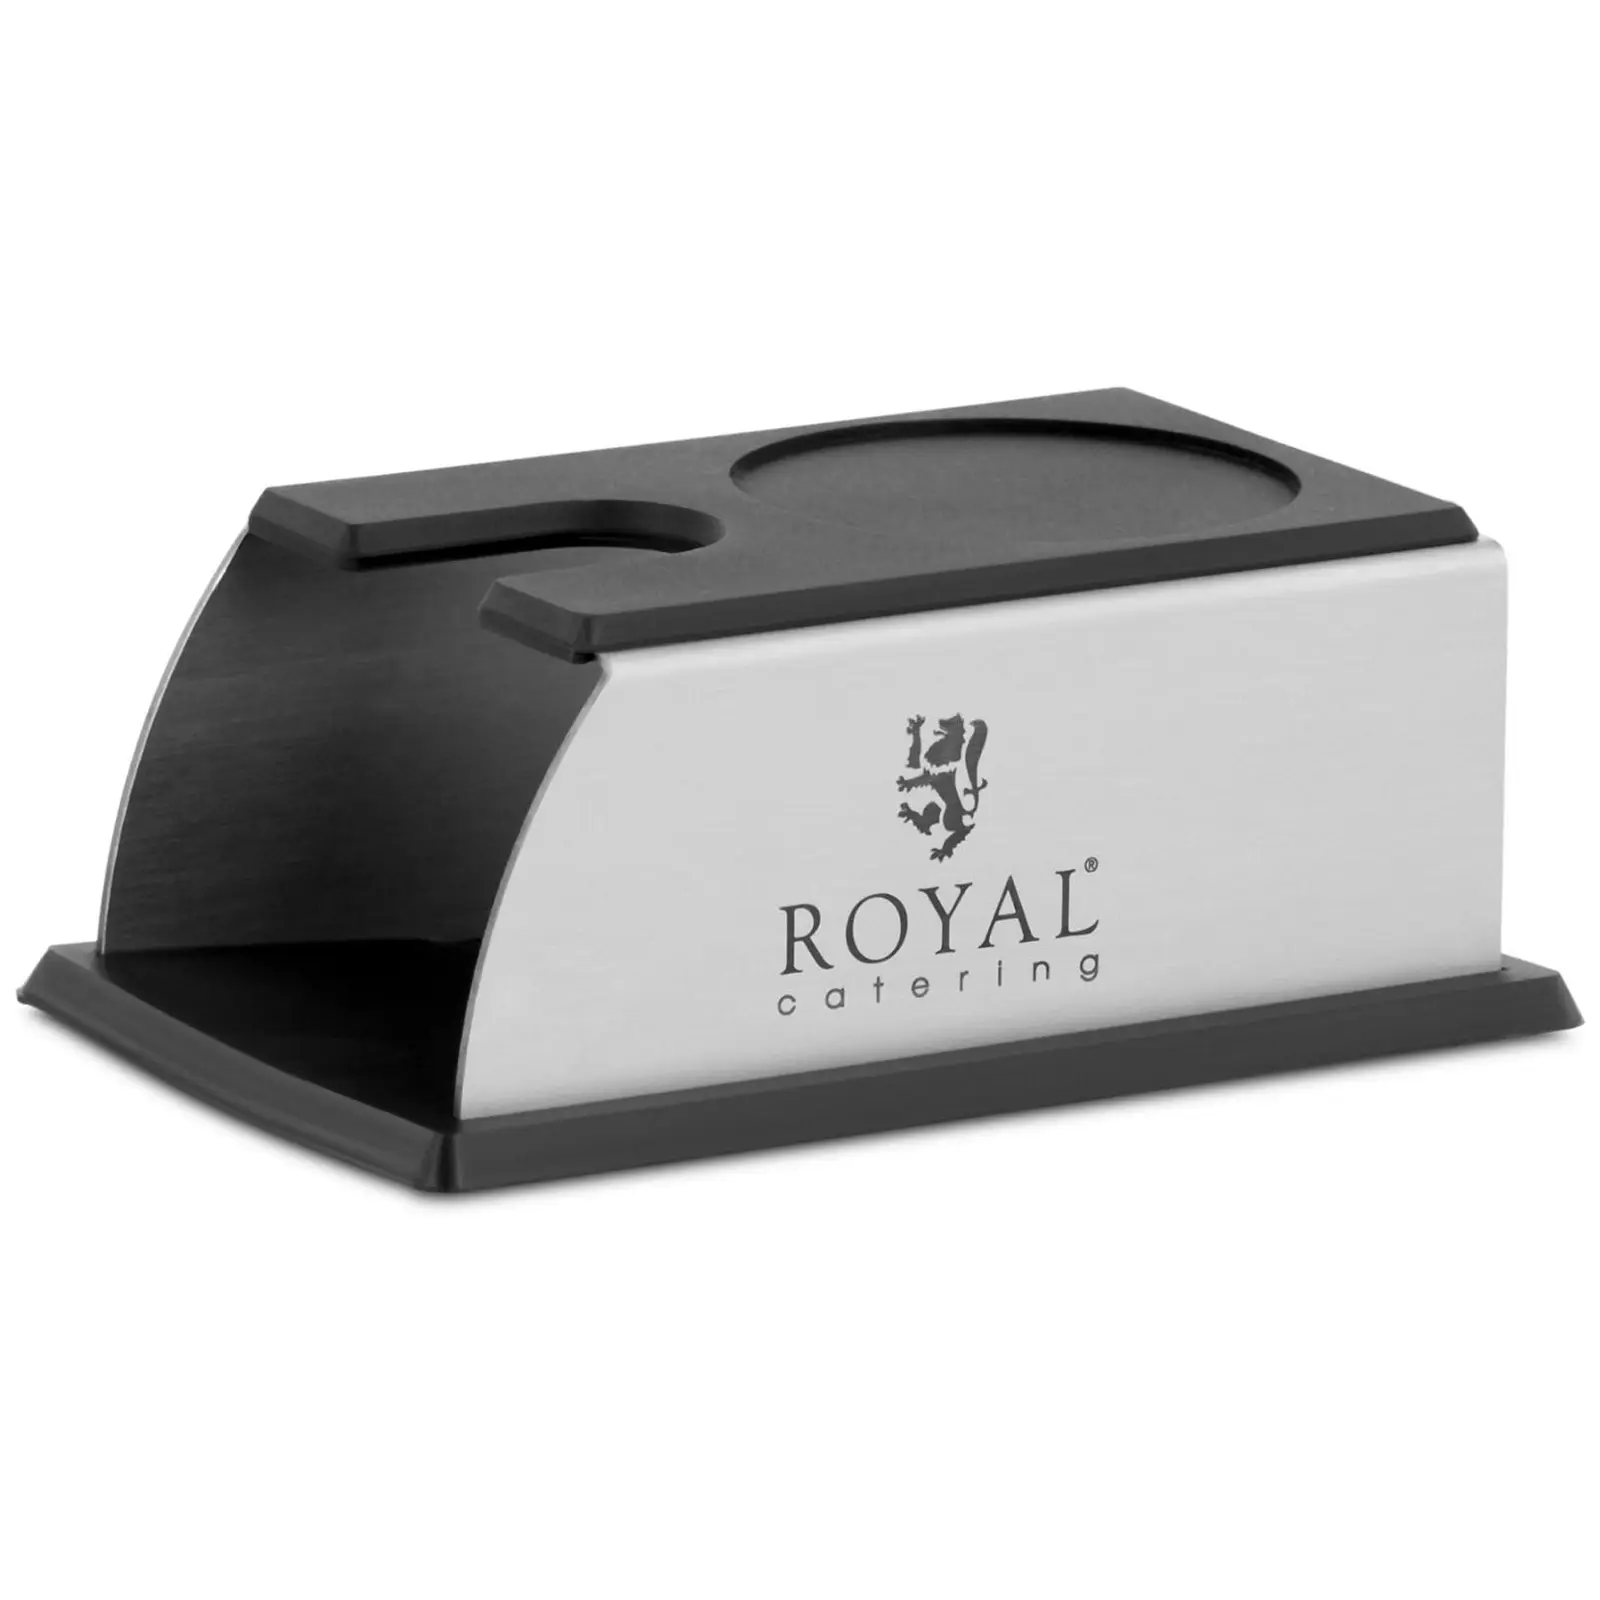 Soporte para prensador de café - Acero inoxidable / silicona - 140 x 93 x 60 mm - Royal Catering